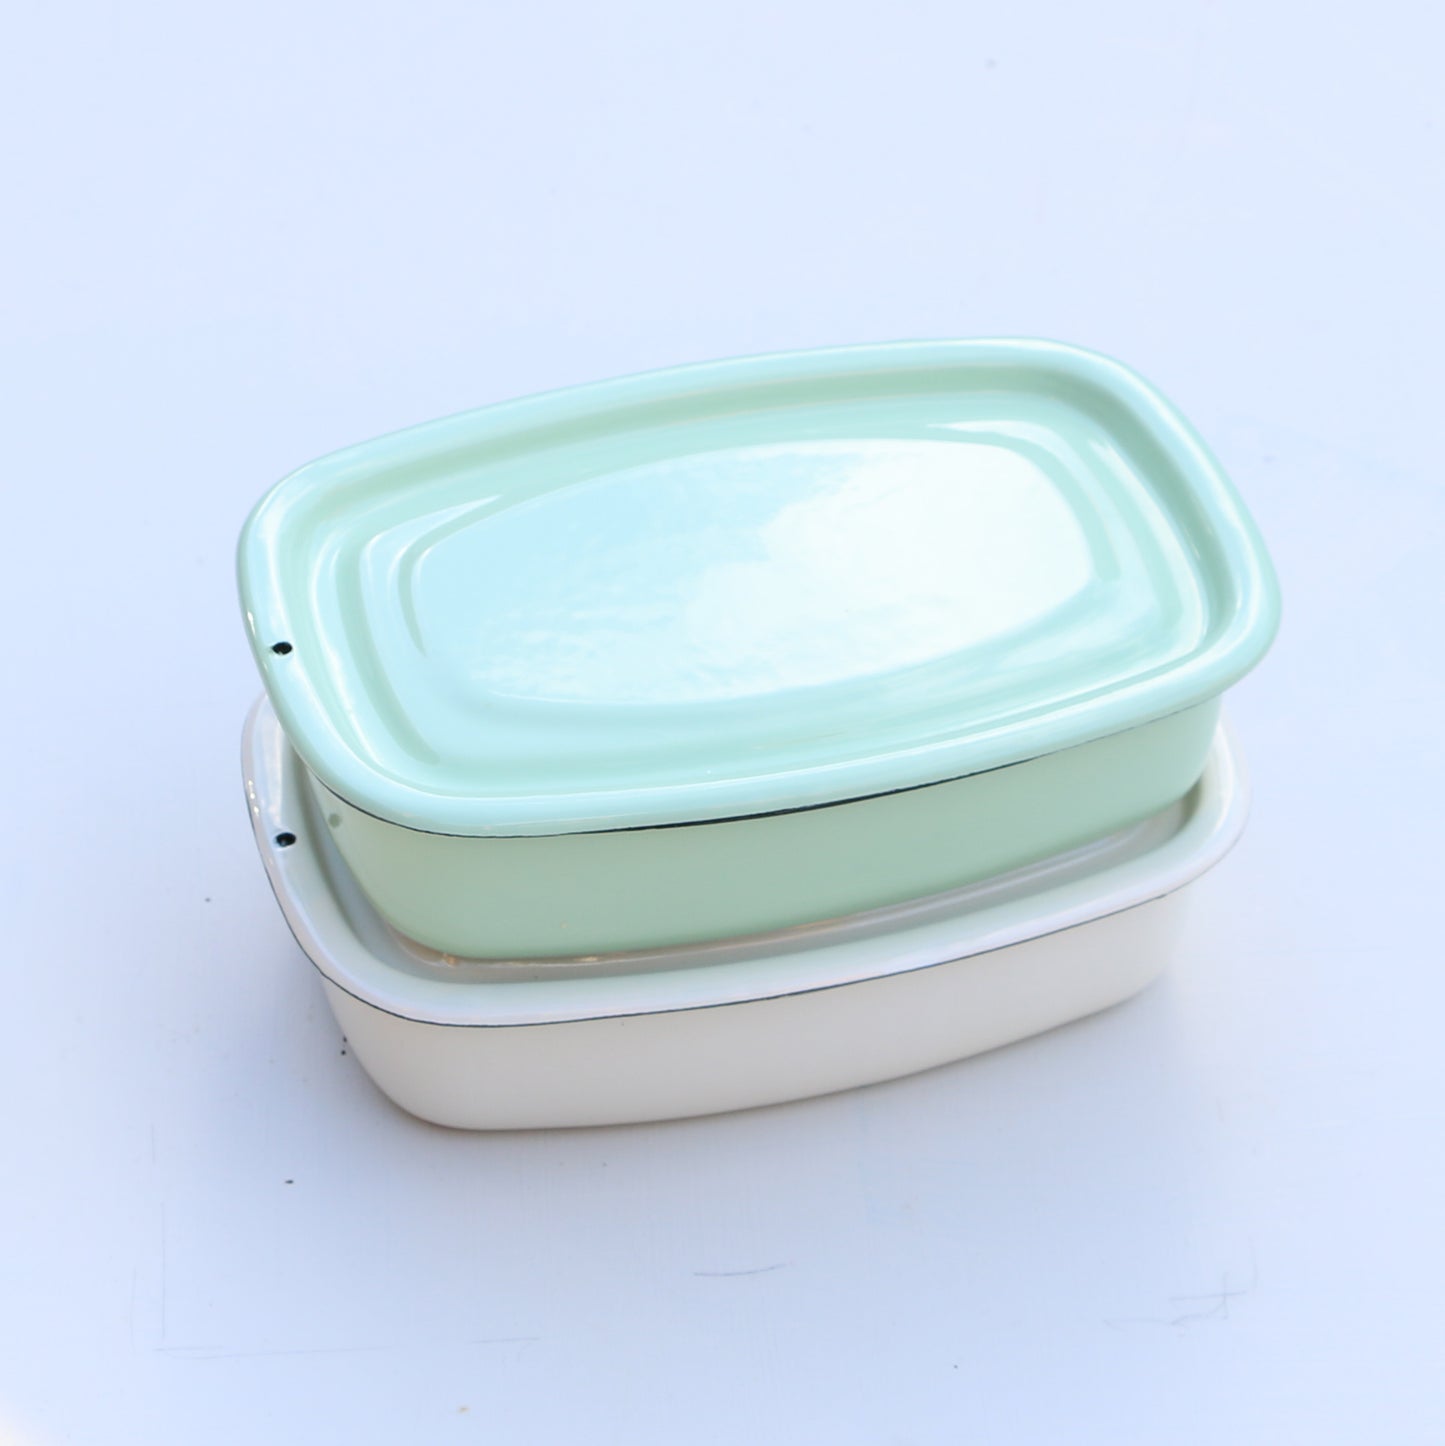 Enamel dish and lid: Large light green